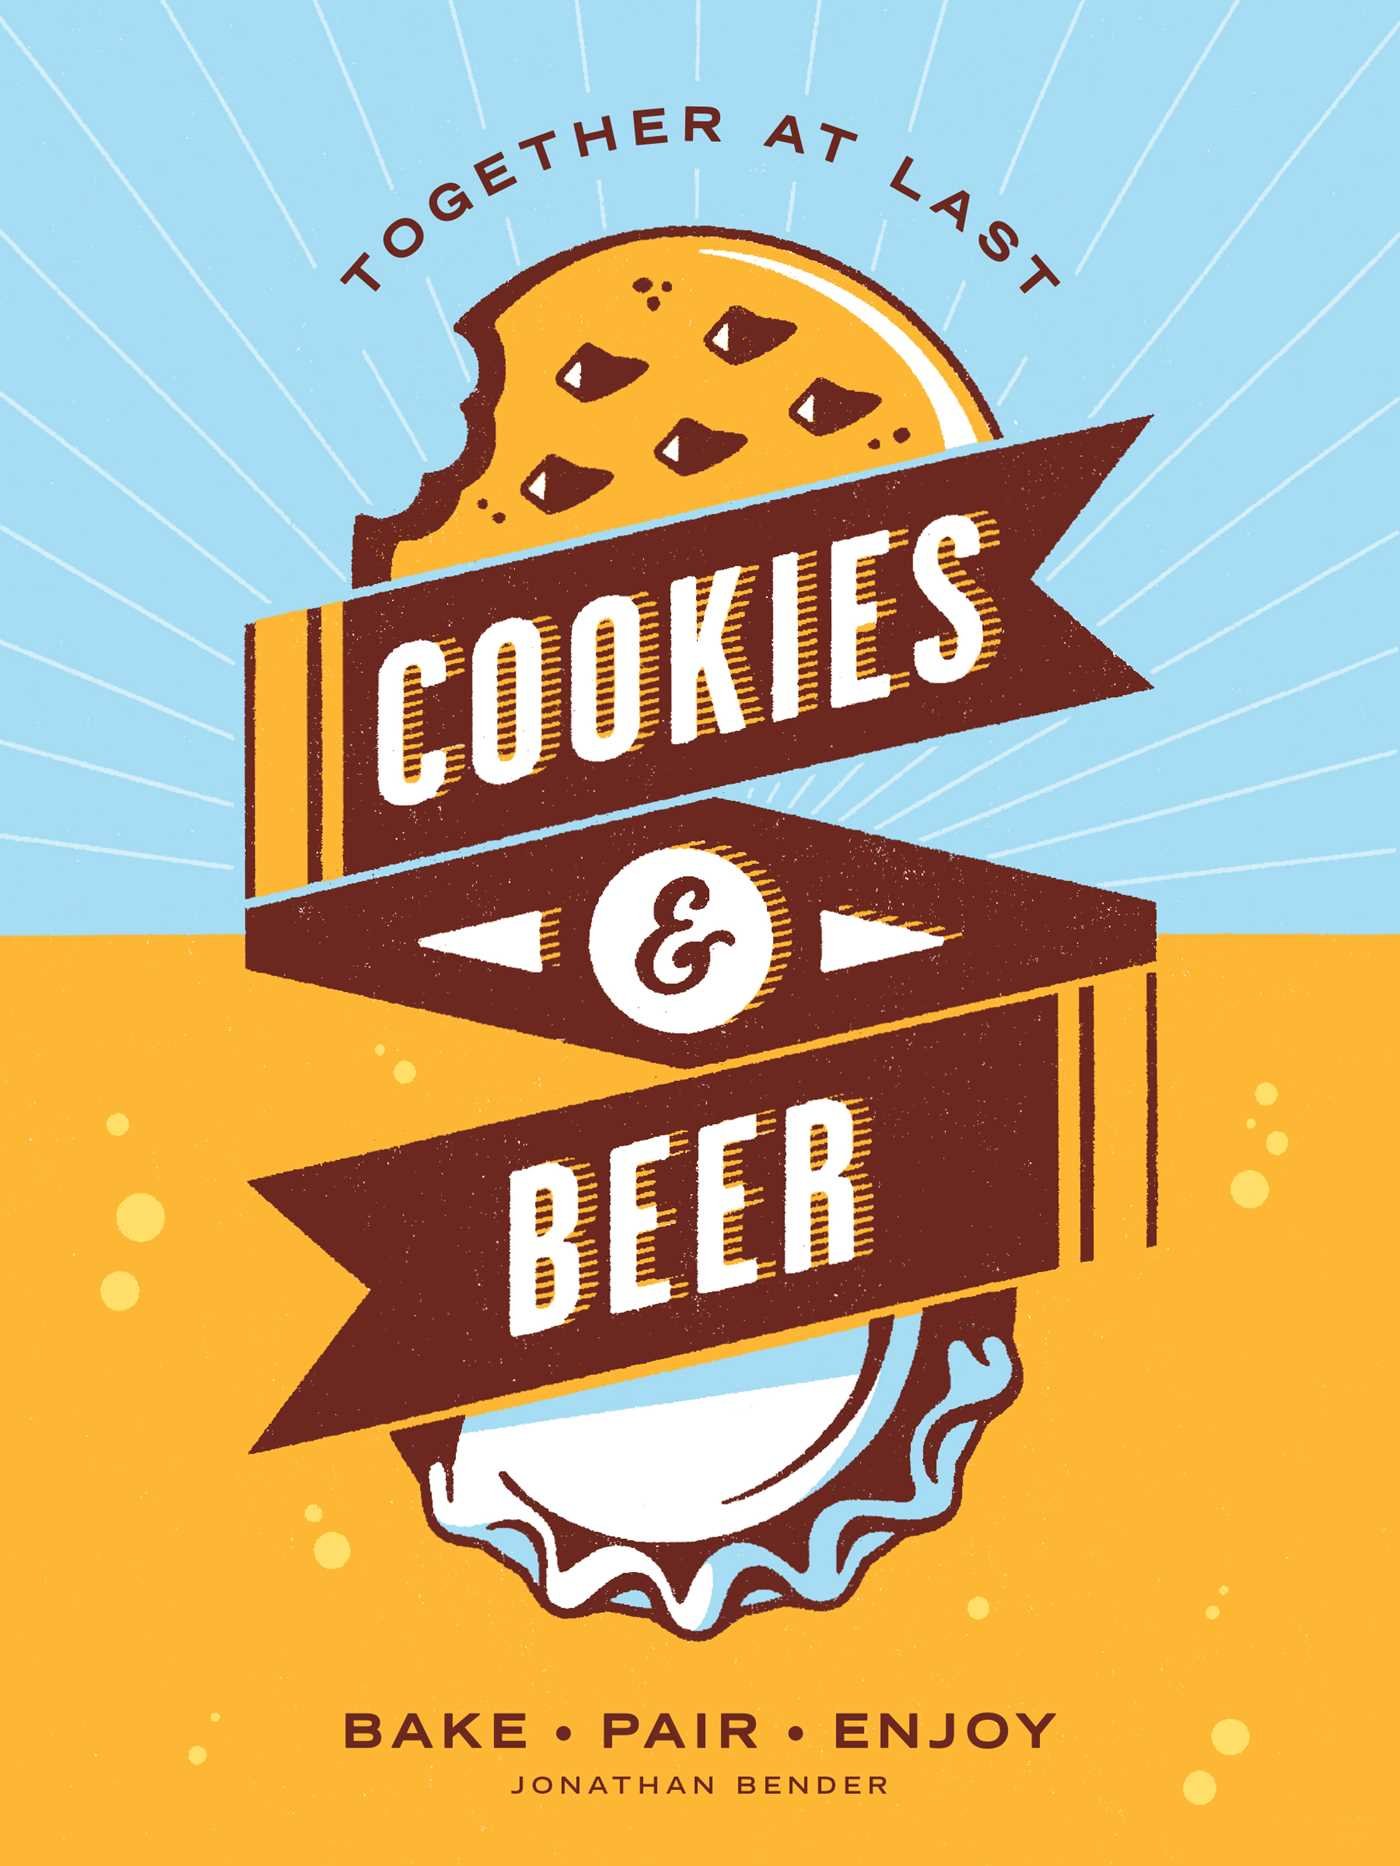 Cookies and Beer